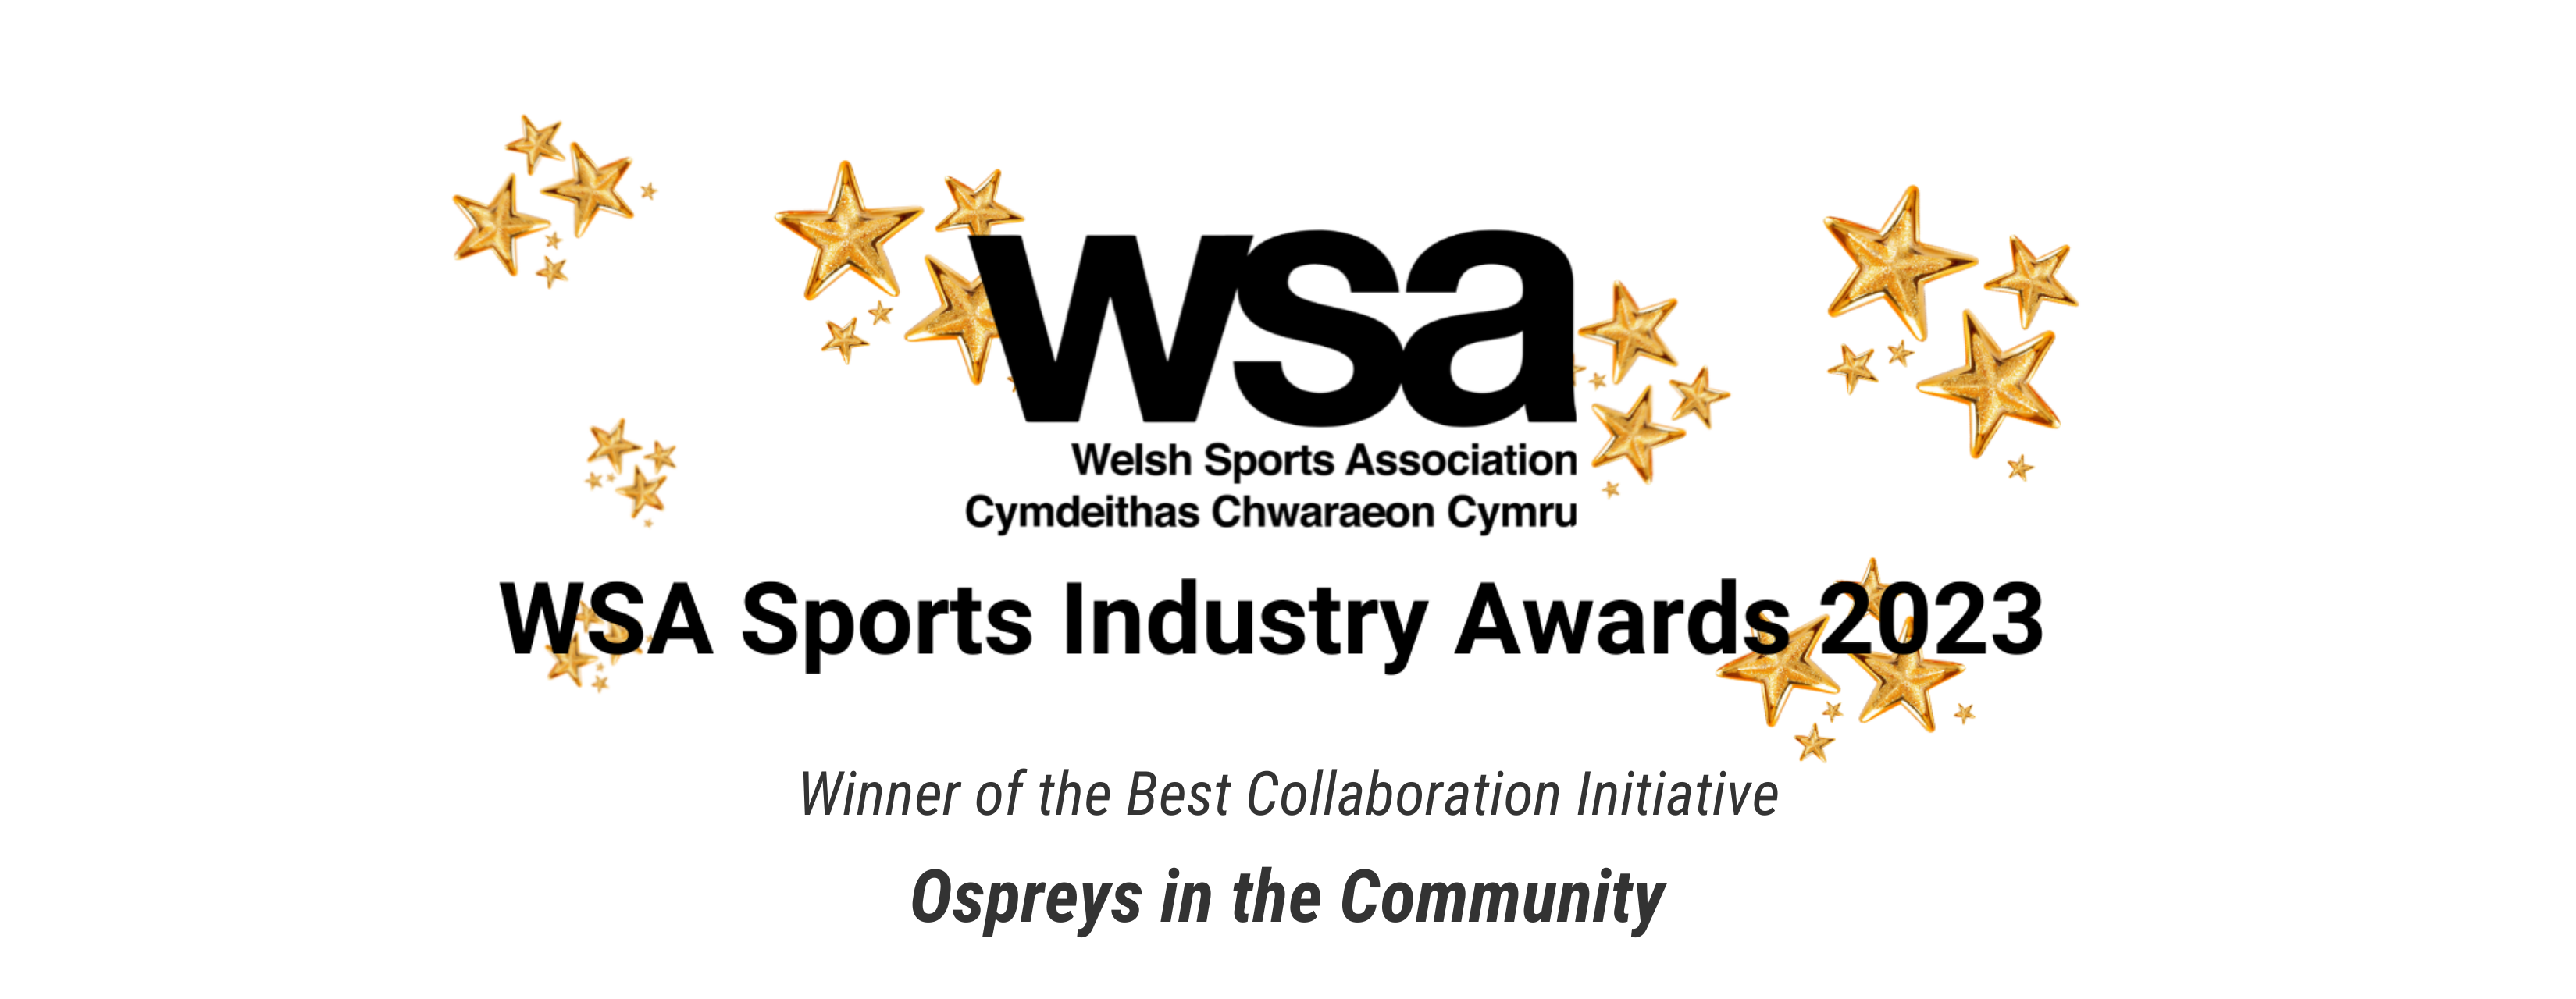 WSA Sports Industry Awards 2023, Best Collaboration Initiative Winner